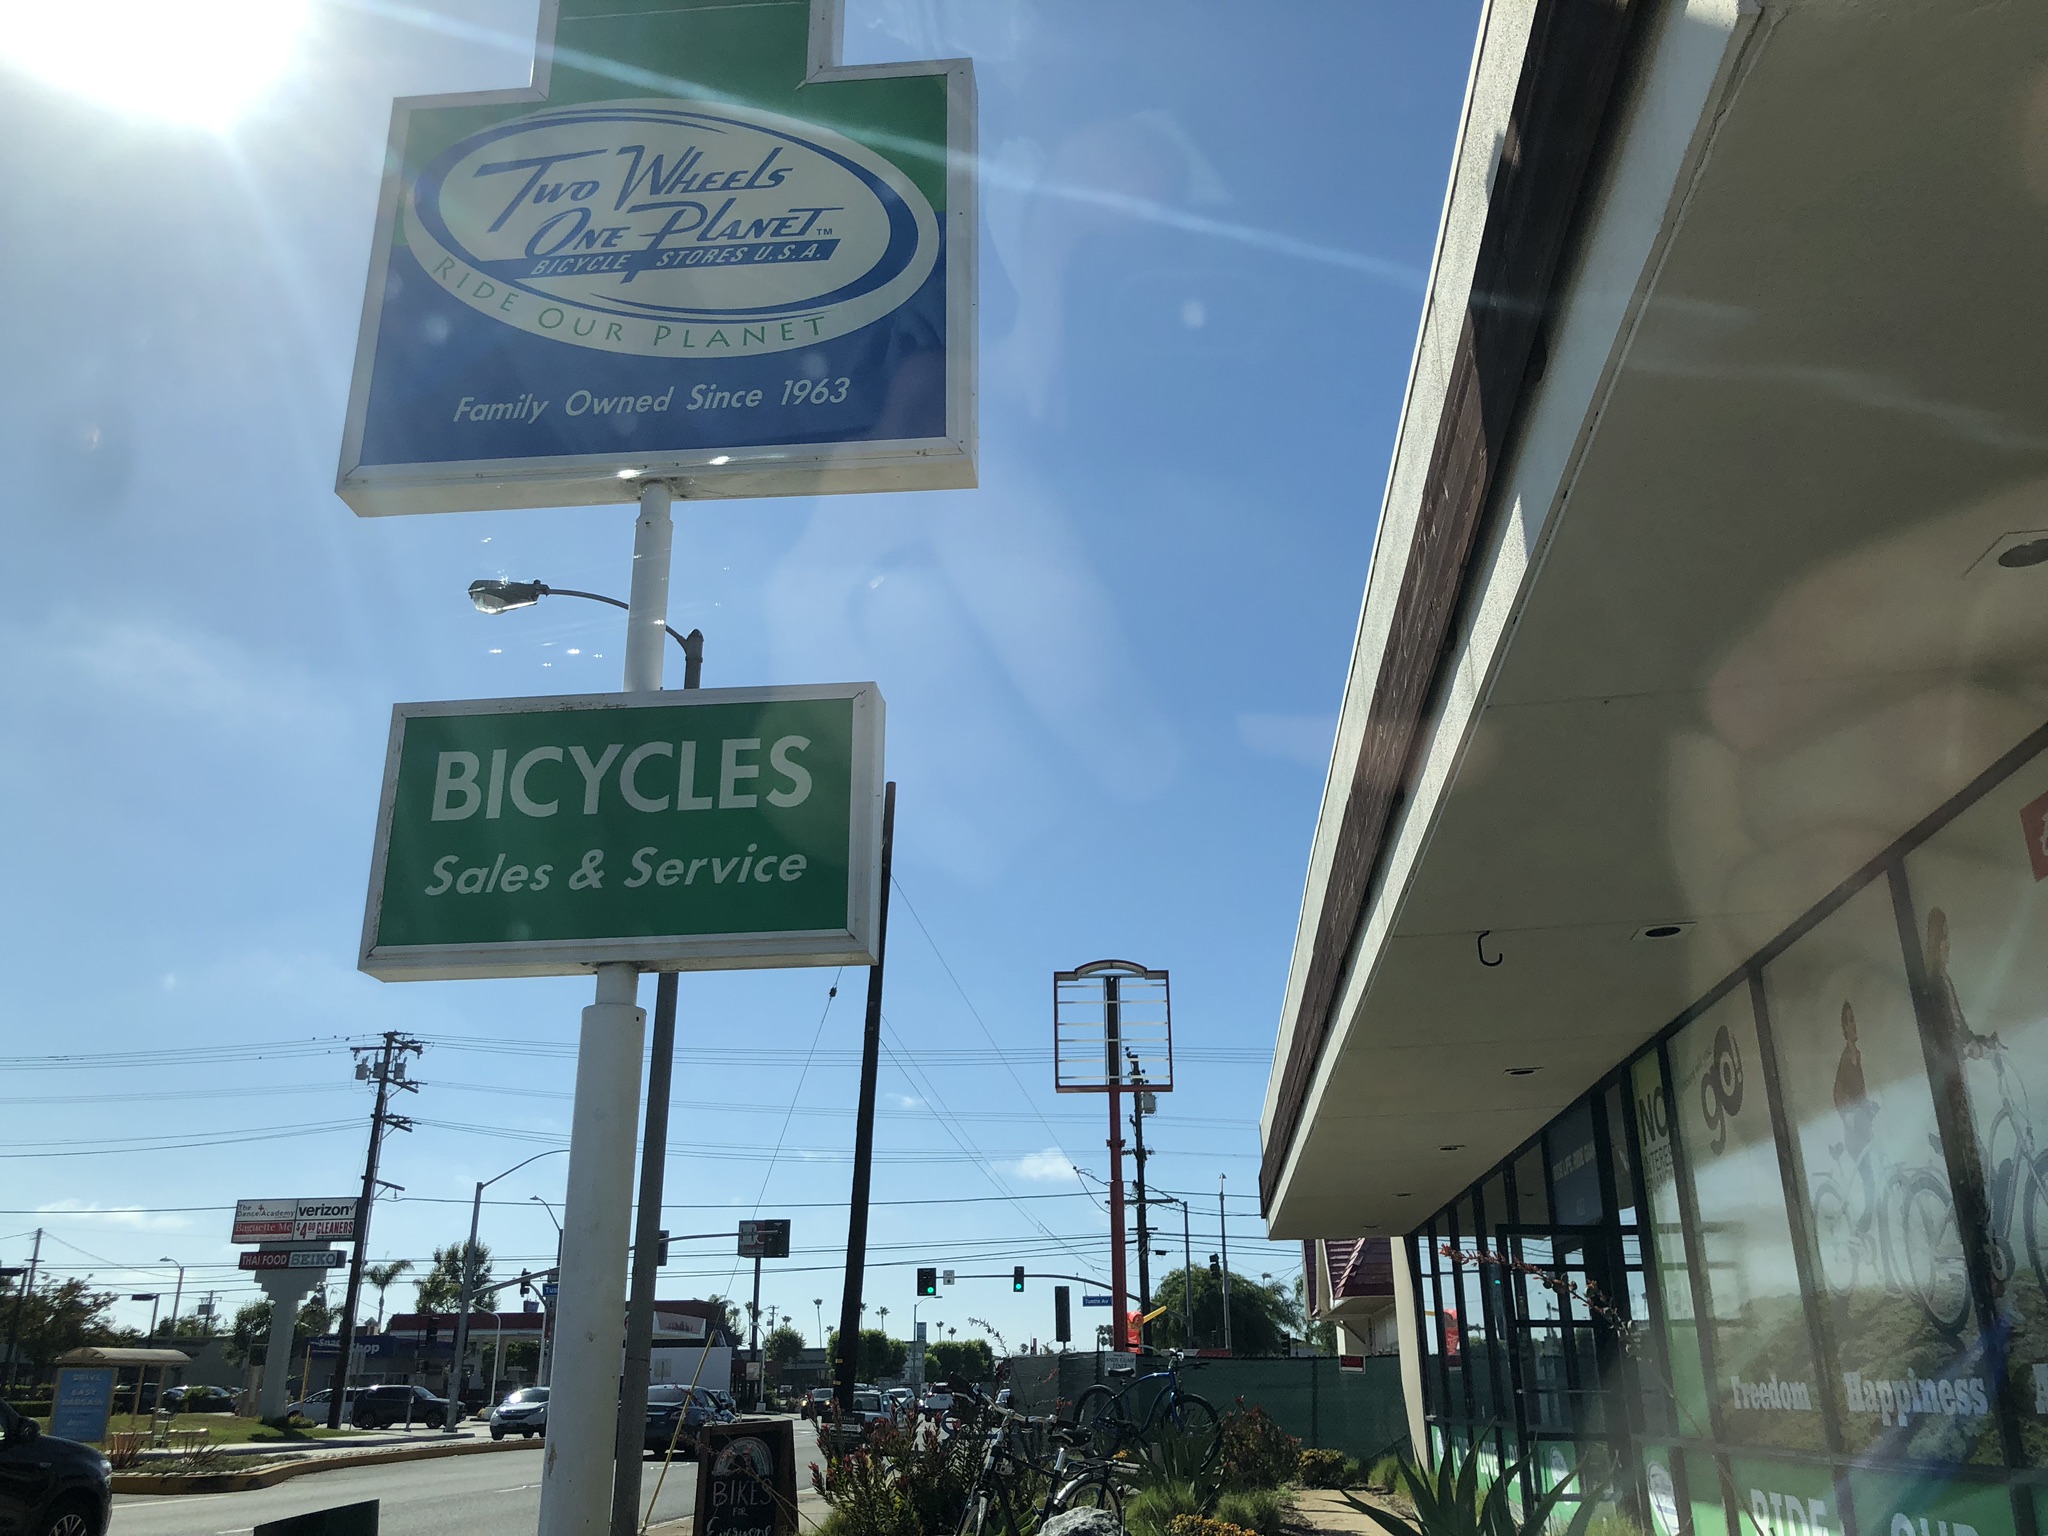 Two Wheels One Planet Bike Shop in Costa Mesa - 1